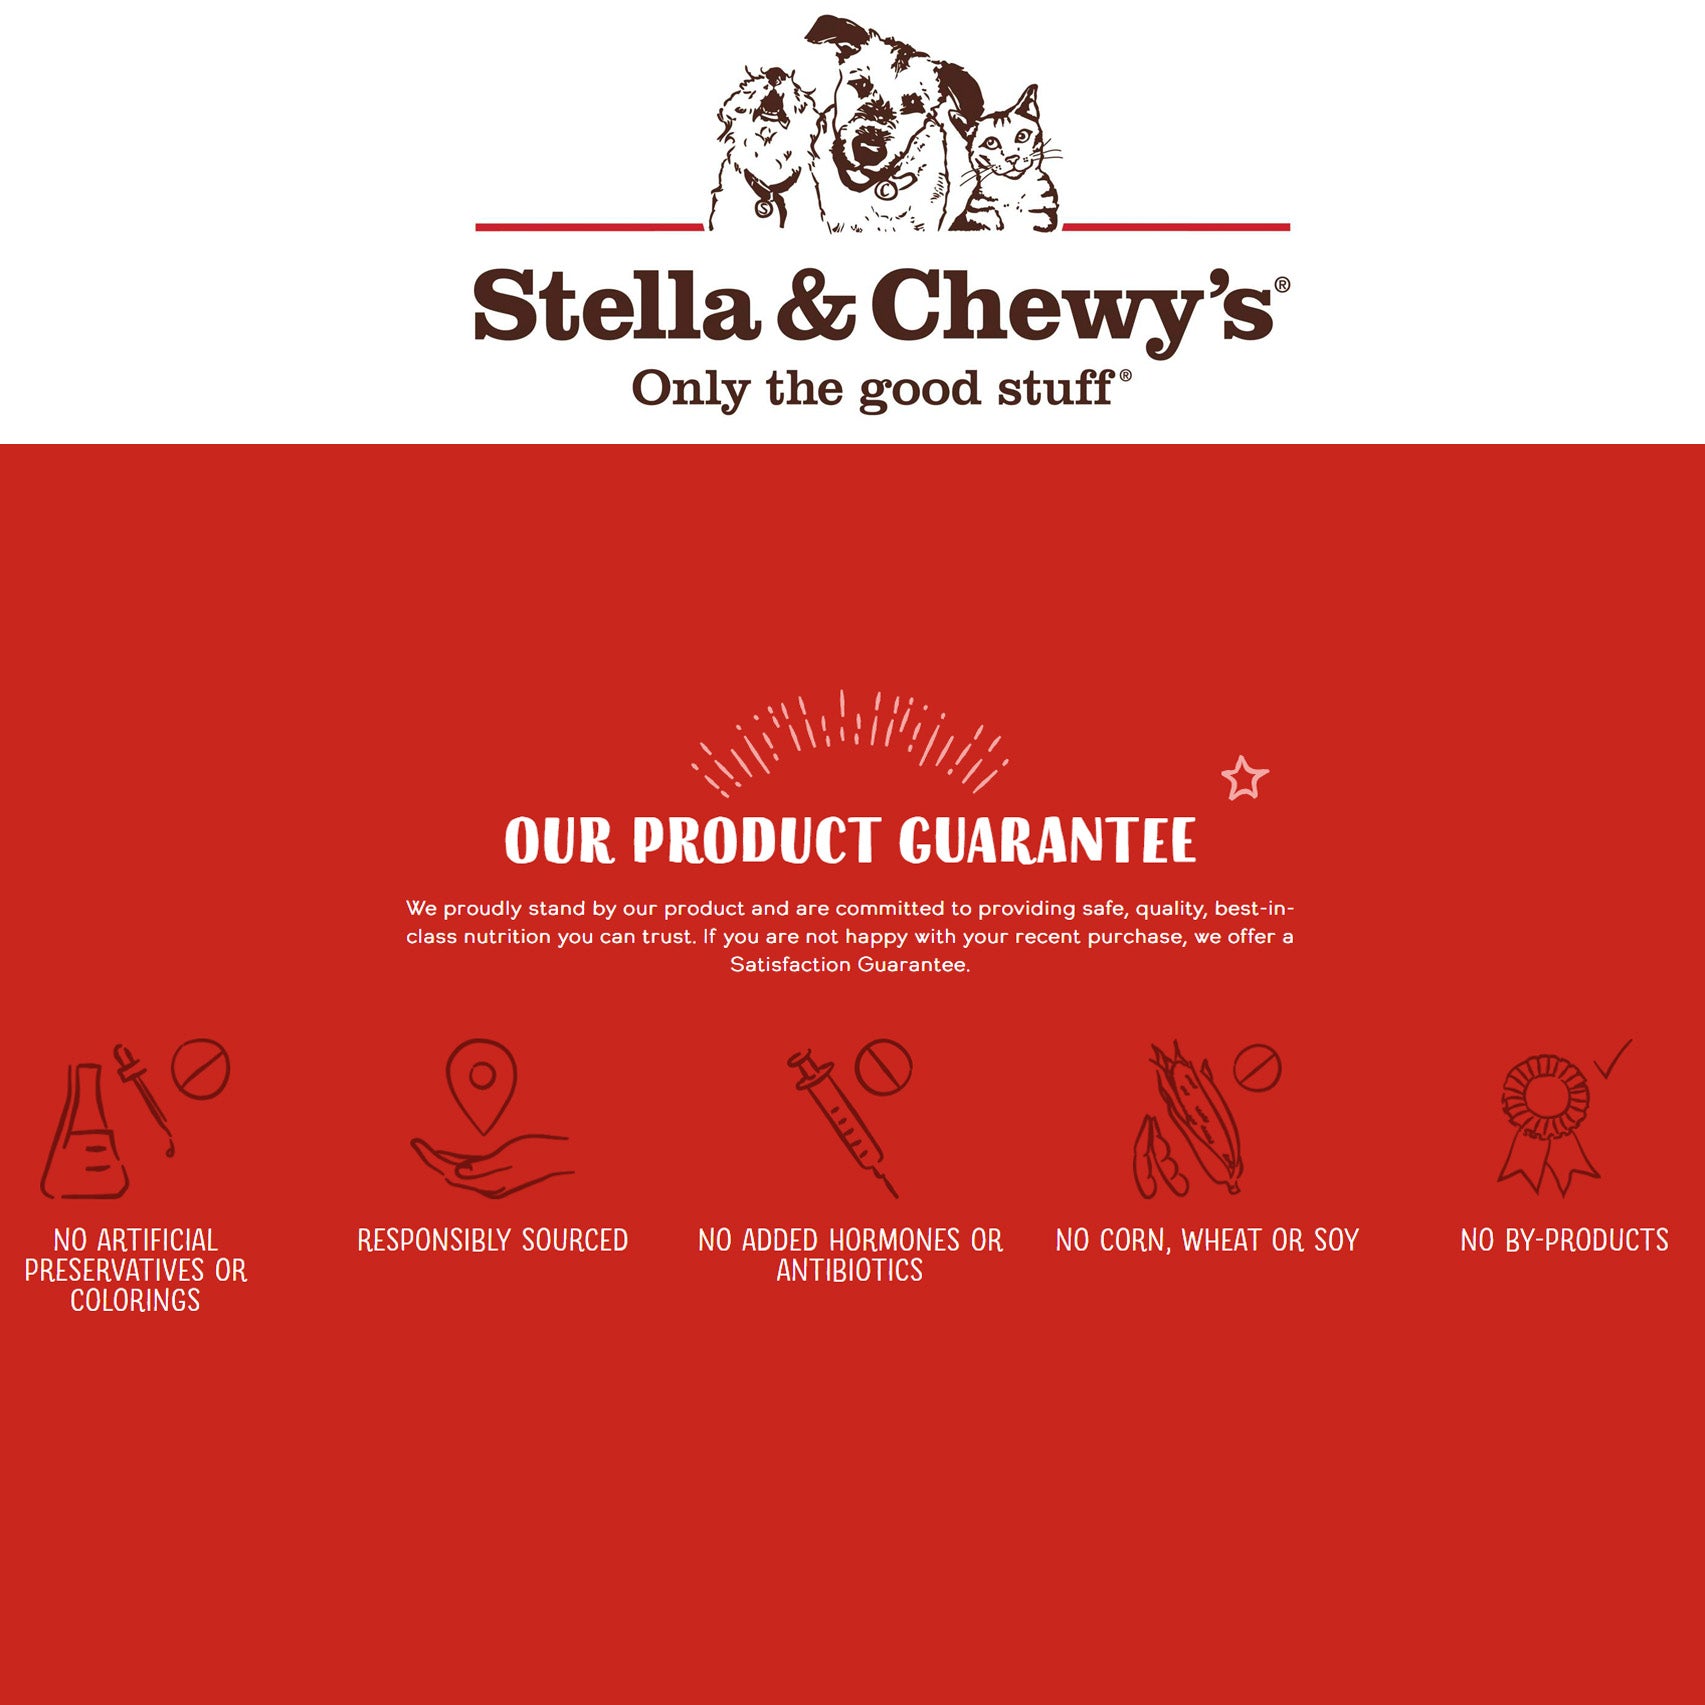 Stella & Chewy's Wild Weenies Game Bird Recipe Freeze Dried Dog Treats